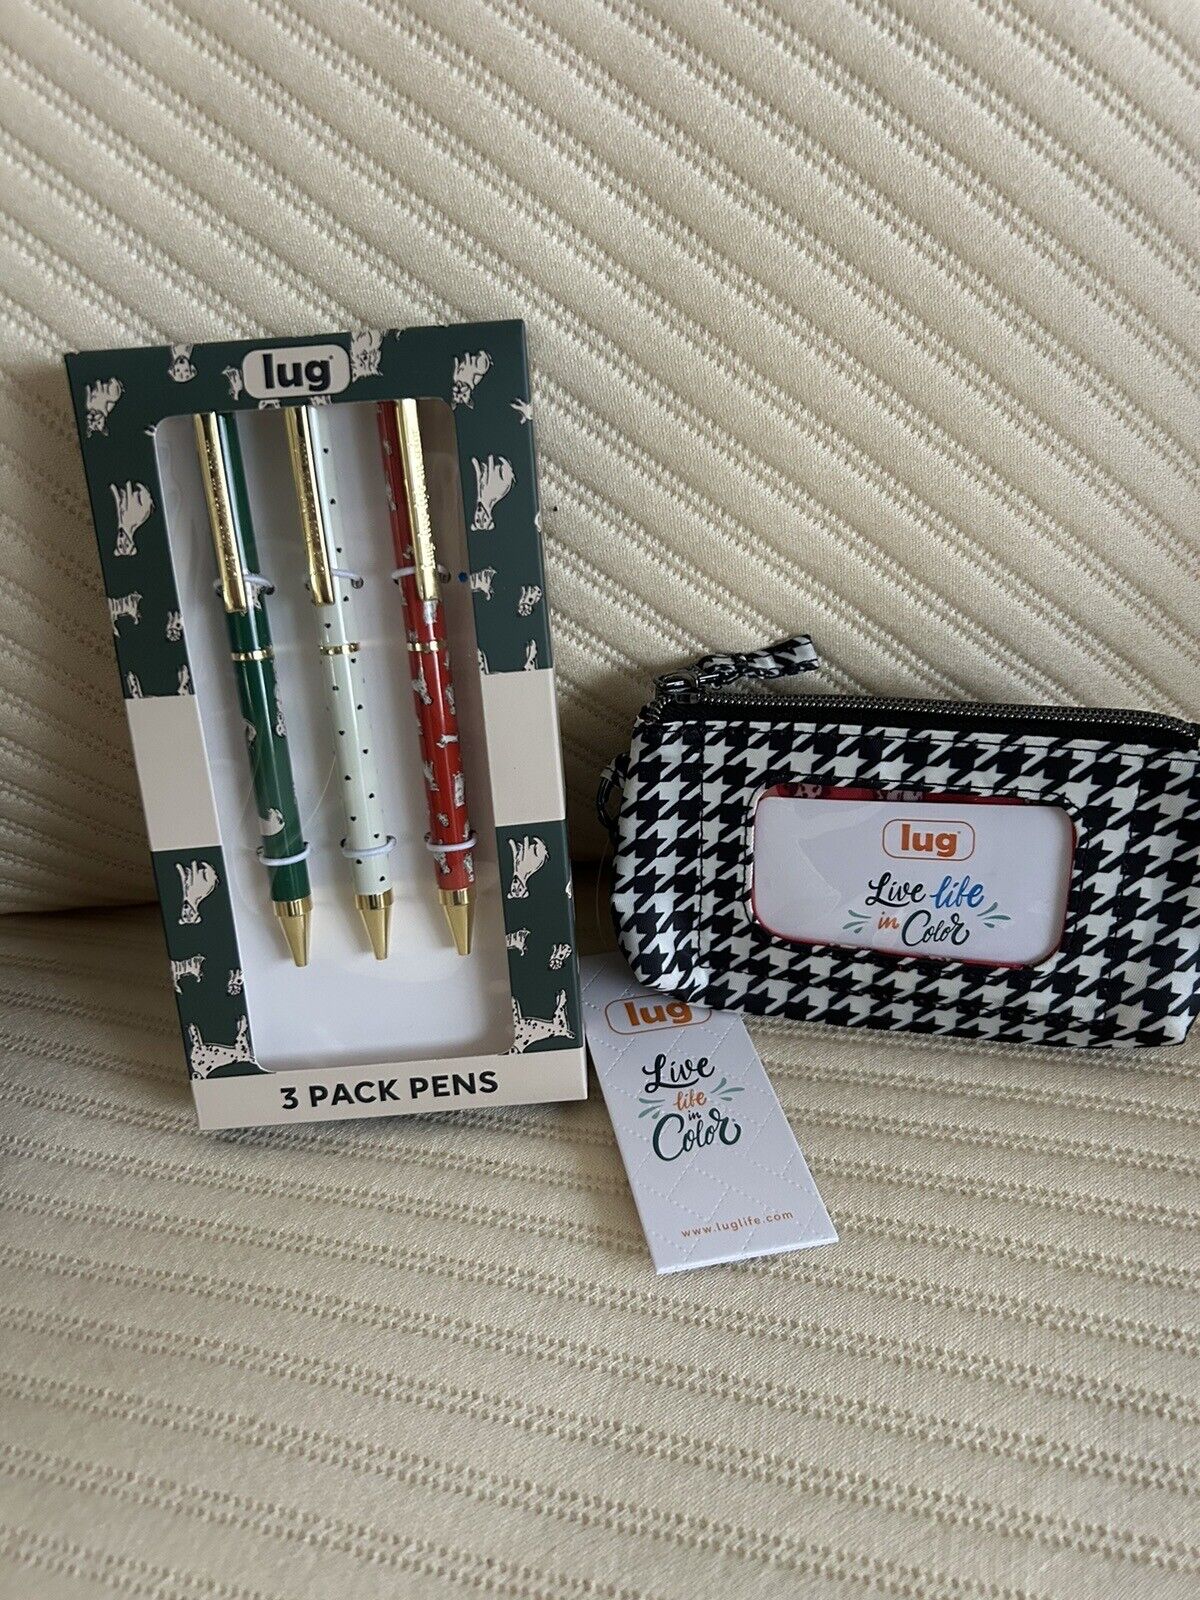 Lug custom Pen Set 3 pc set NEW in Box Plus houndstooth Metro XL - NWT